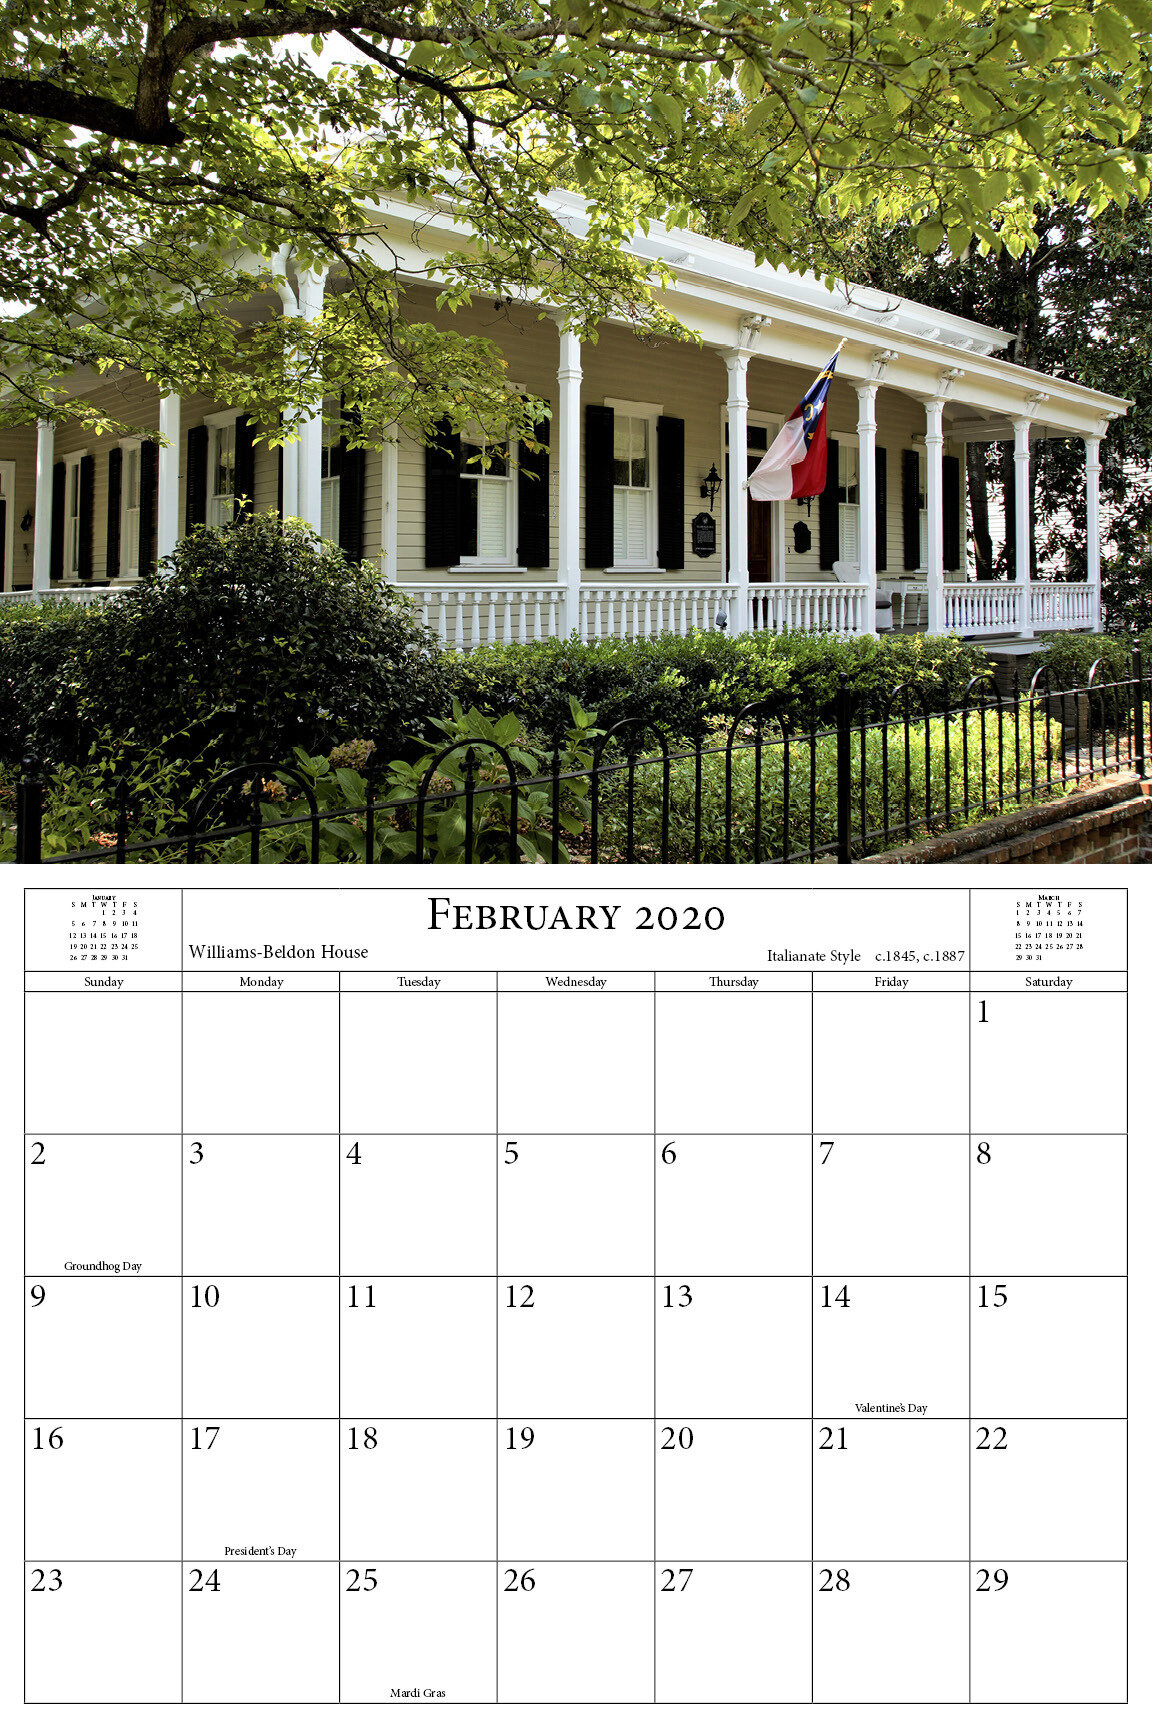 Wilmington Calendar 2019 Desgin by Cybergraph Photos by Michael Smith15.jpg